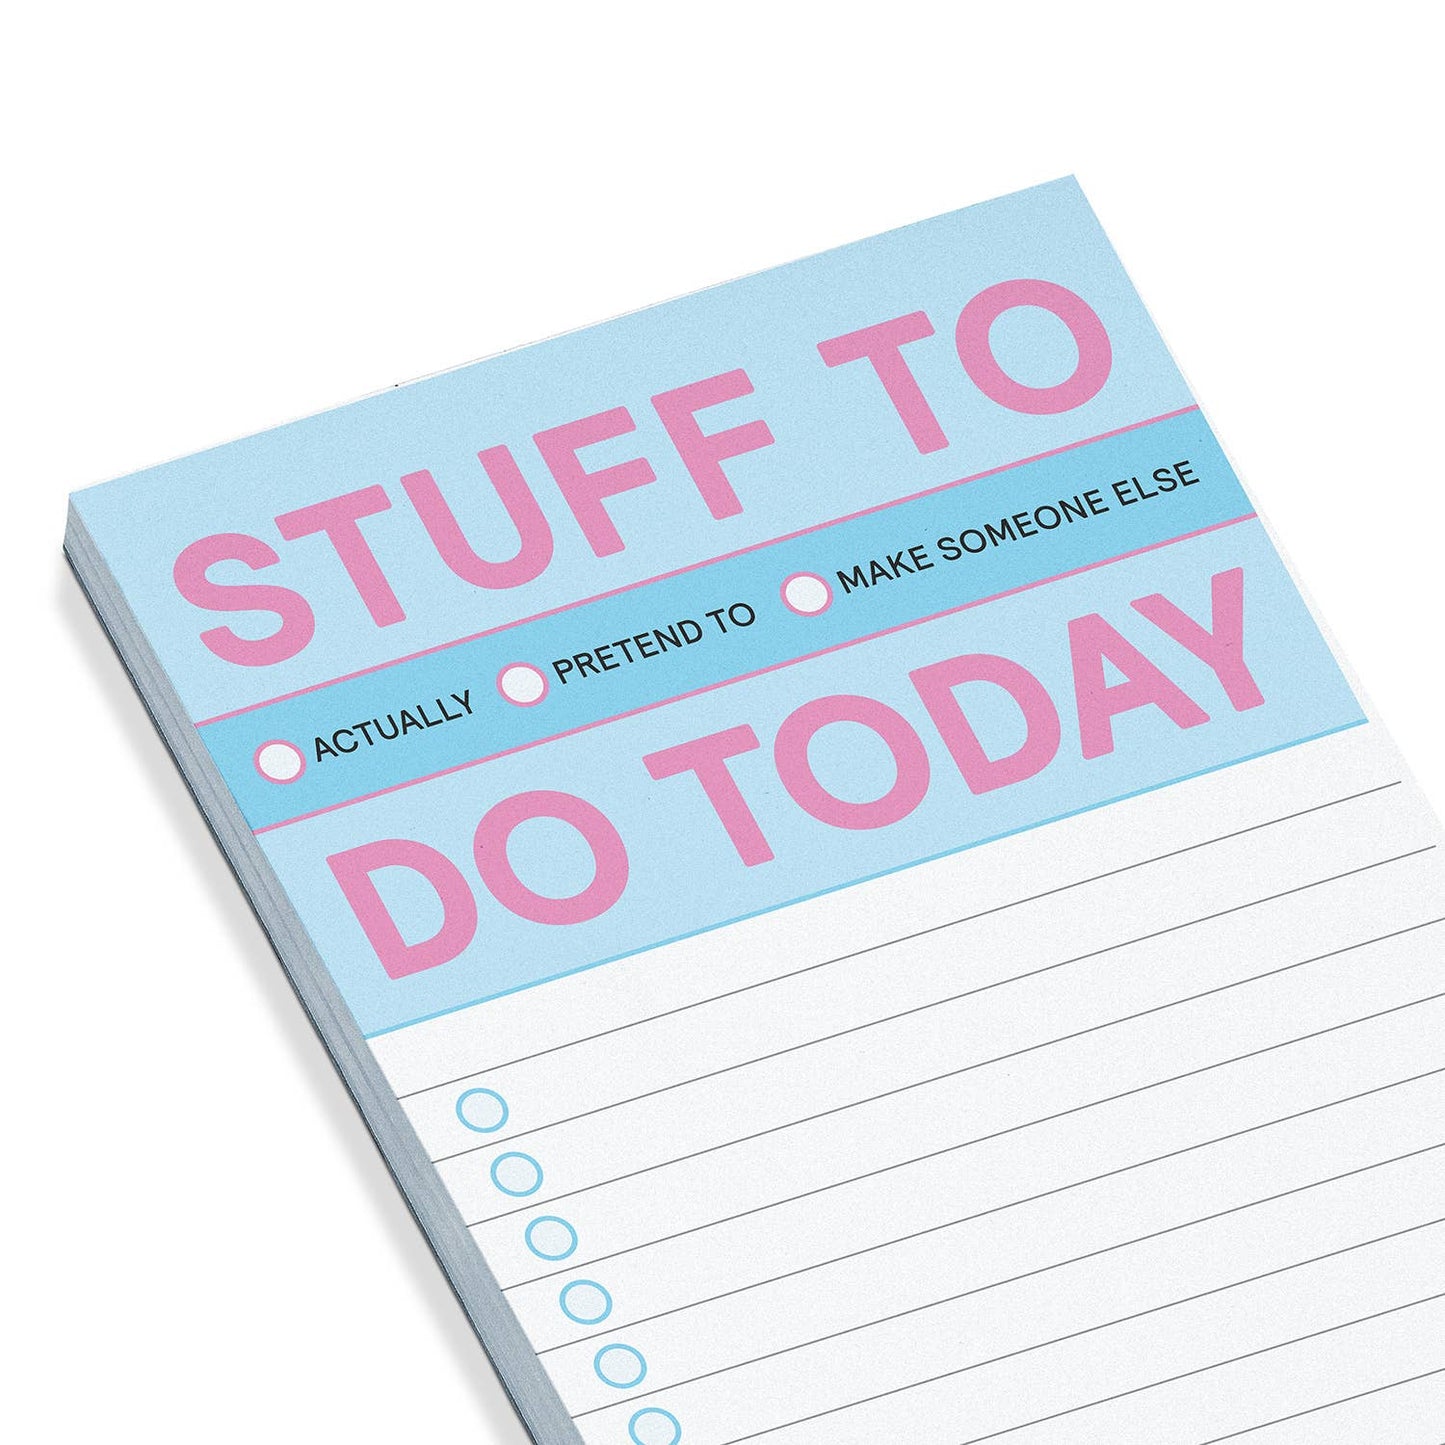 Stuff to Do Today Make-a-List Pad